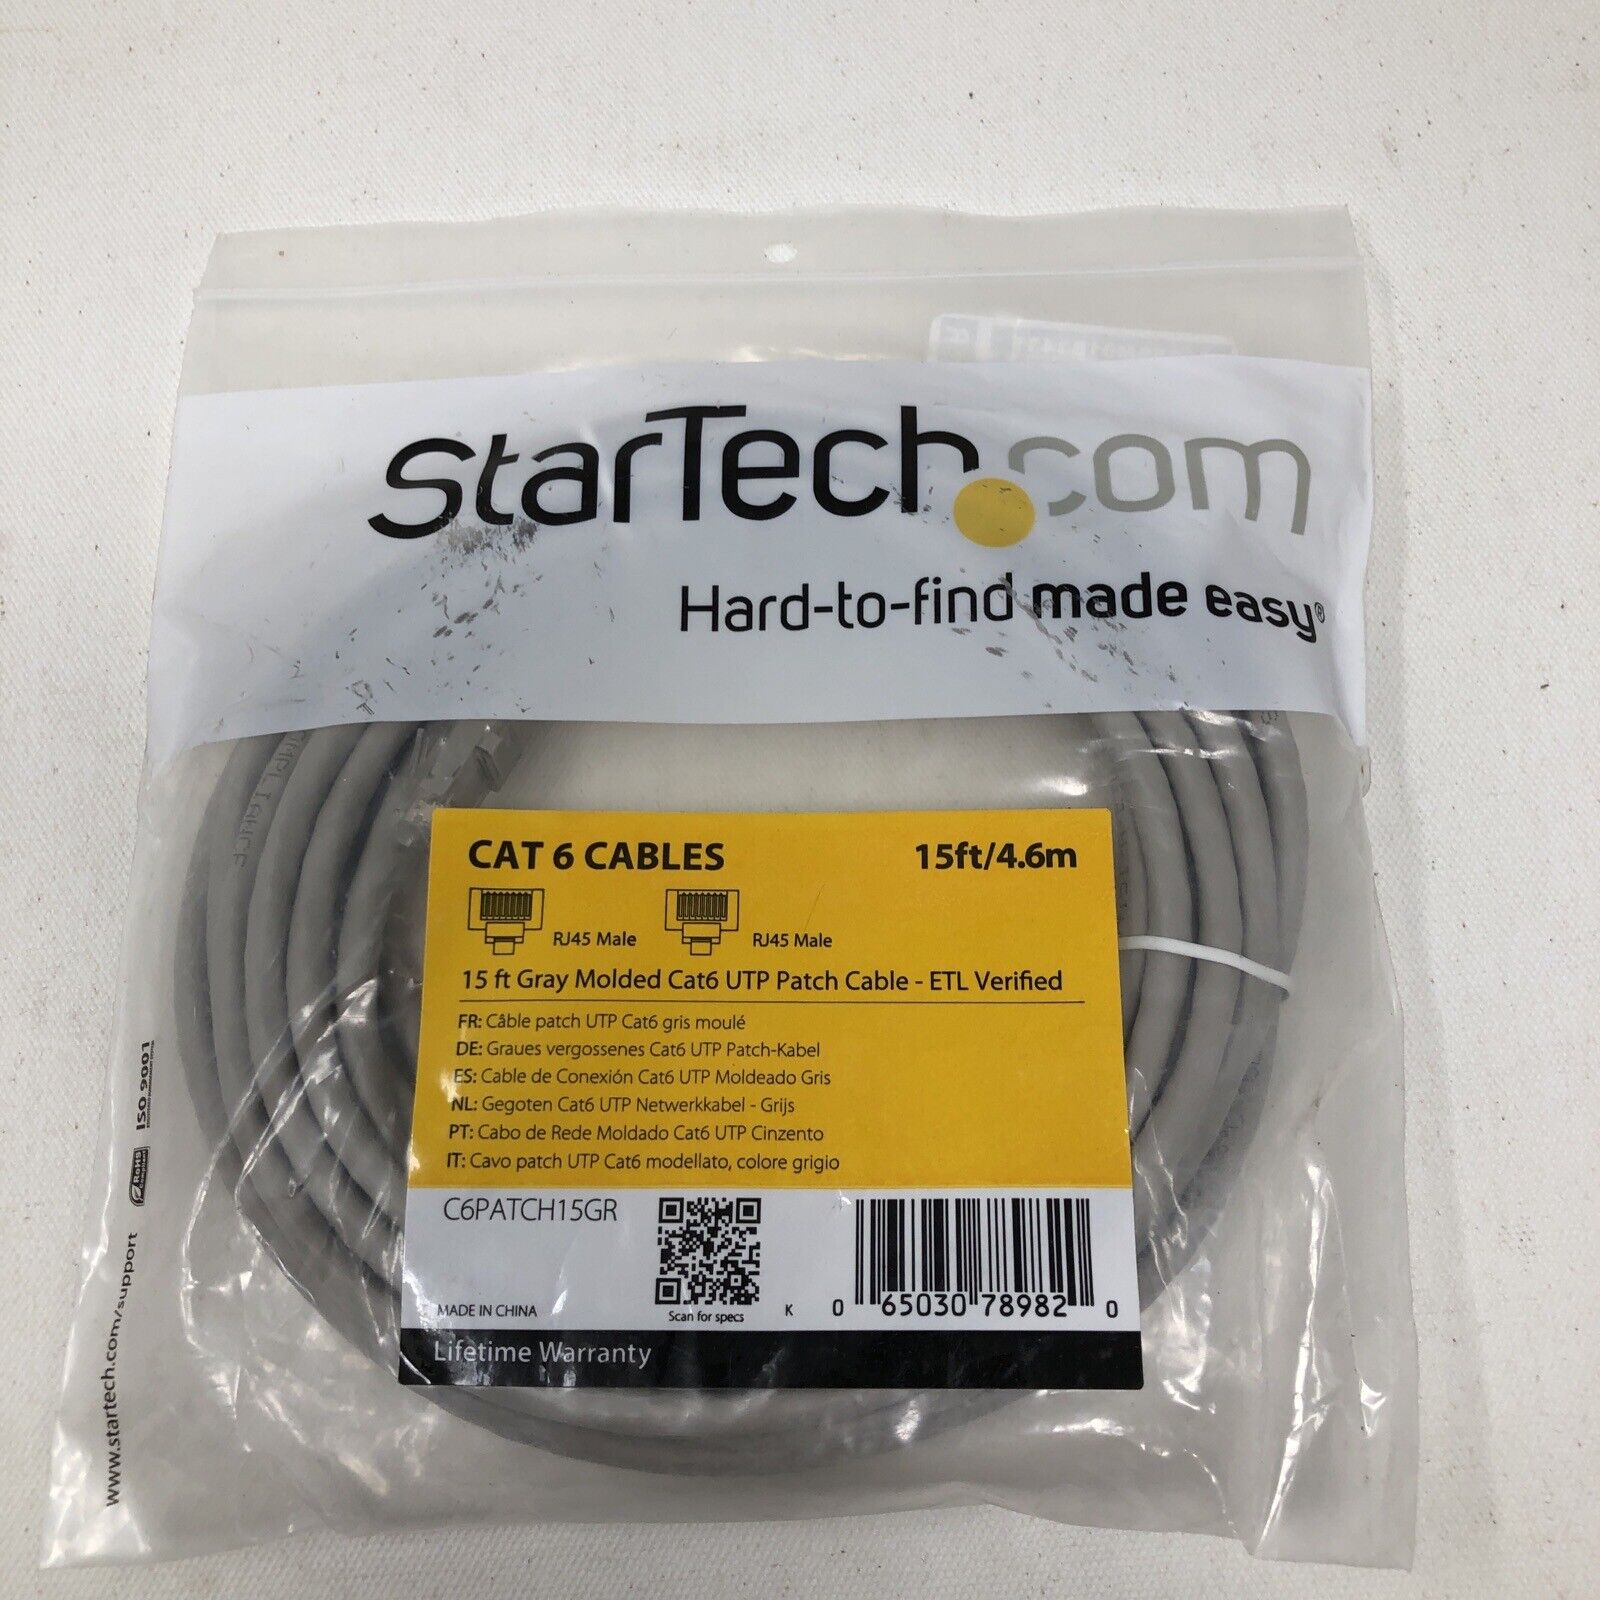 StarTech.com Cat6 Cables 15ft RJ45 Male To RJ45 Male 